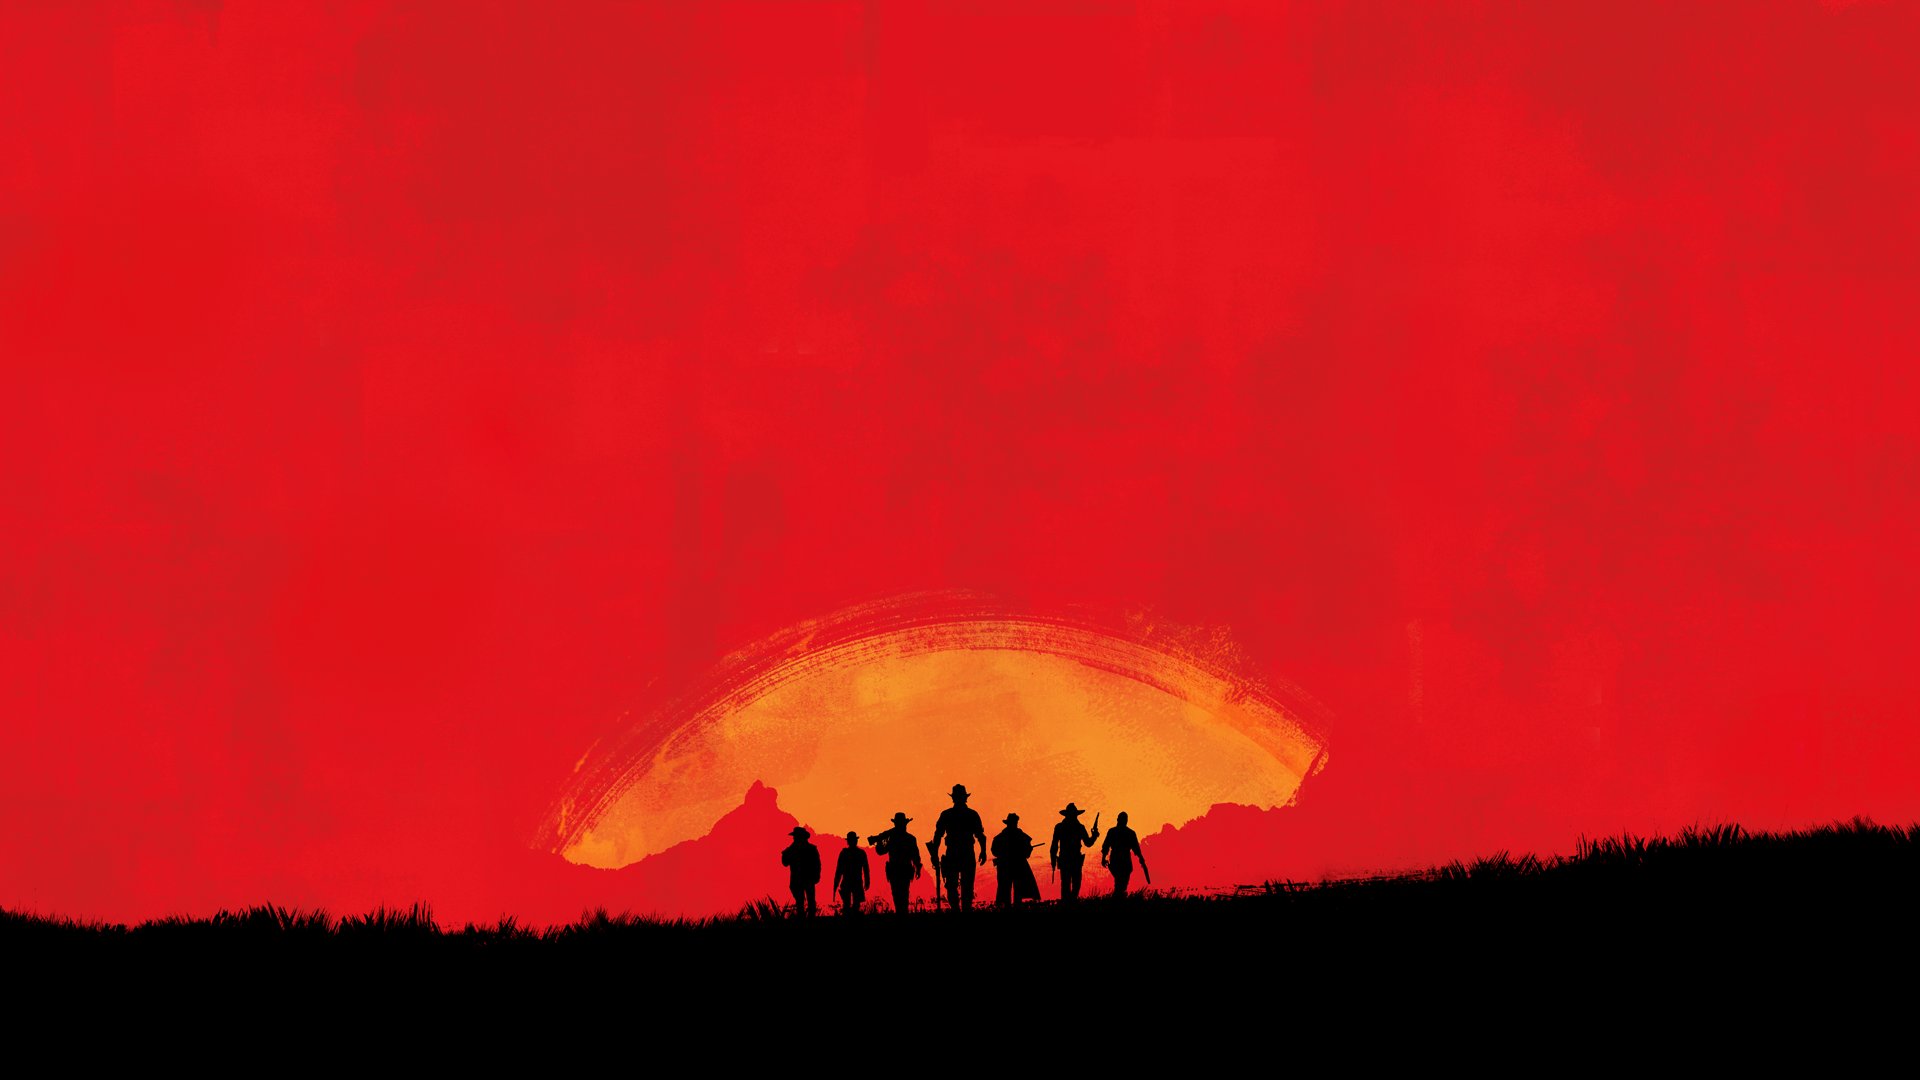 Red Dead Redemption 2 Tease?